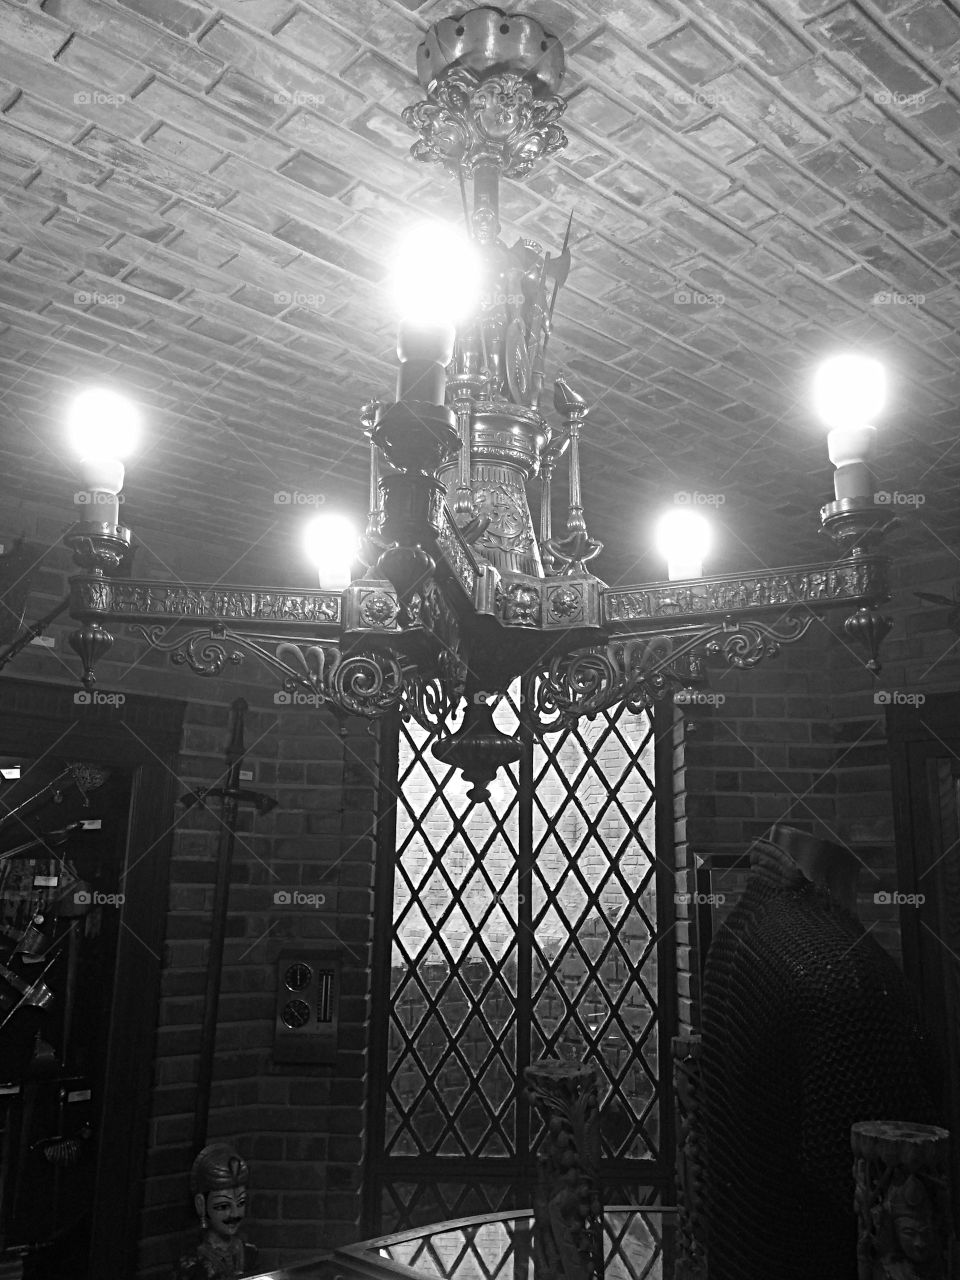 Chandelier. The chandelier of castle